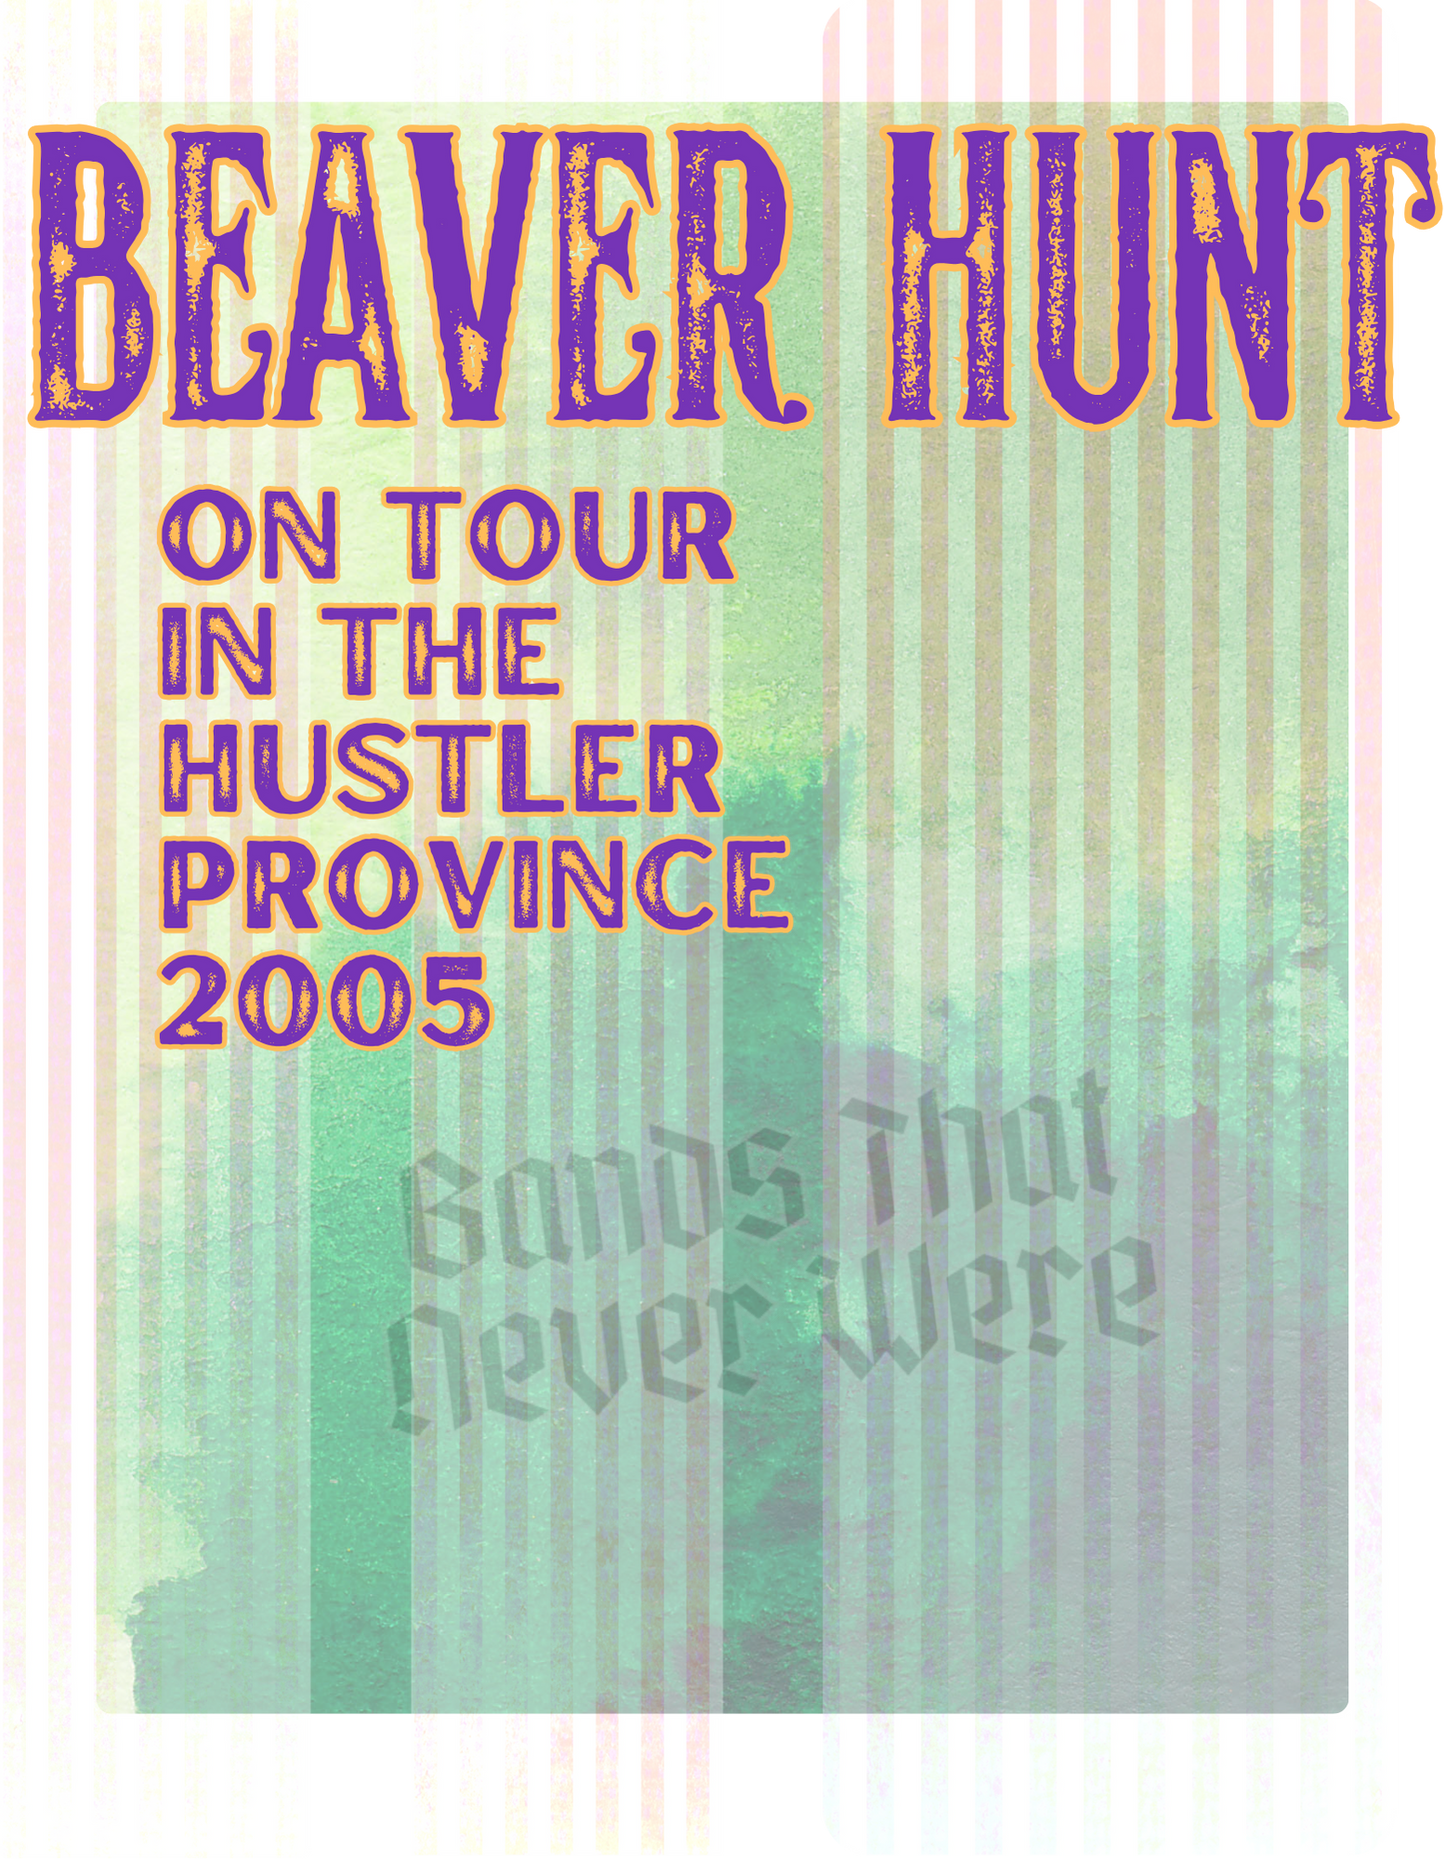 Beaver Hunt: Garment Dyed Tee